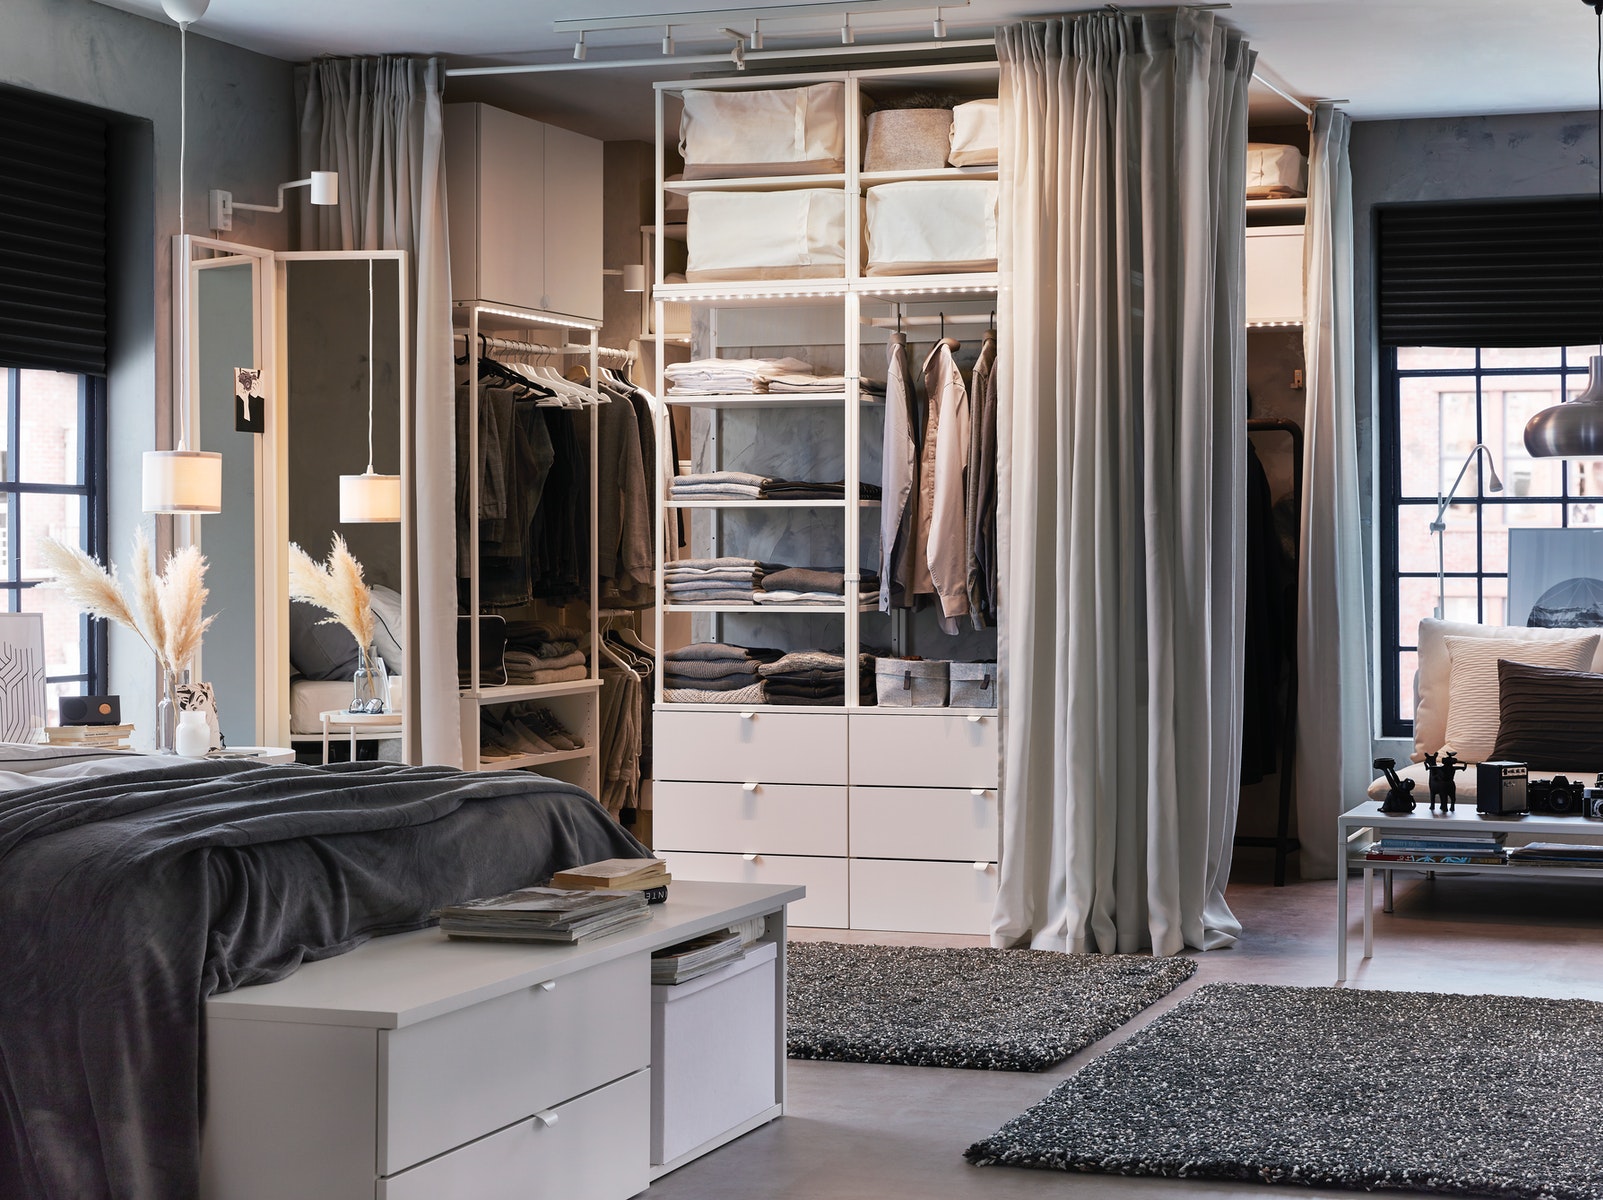 Organising your bedroom storage - IKEA Indonesia